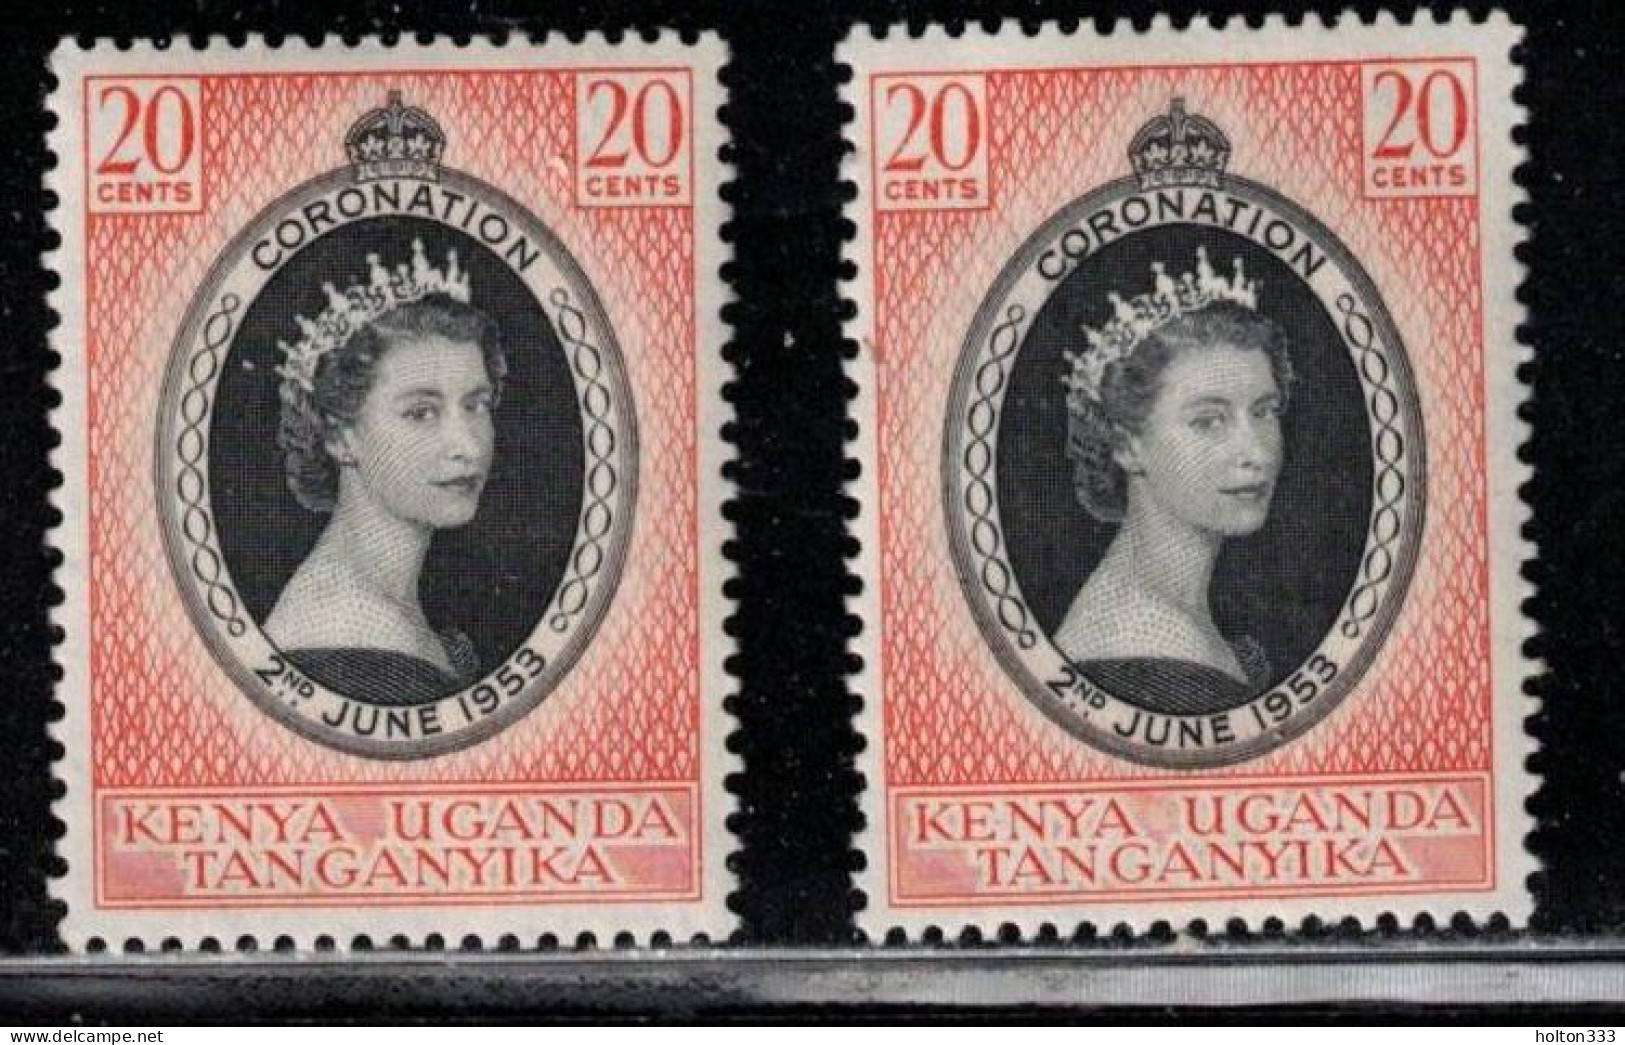 KENYA, UGANDA & TANGANYIKA Scott # 101 MH X 2 - QEII Coronation - Kenya, Ouganda & Tanganyika